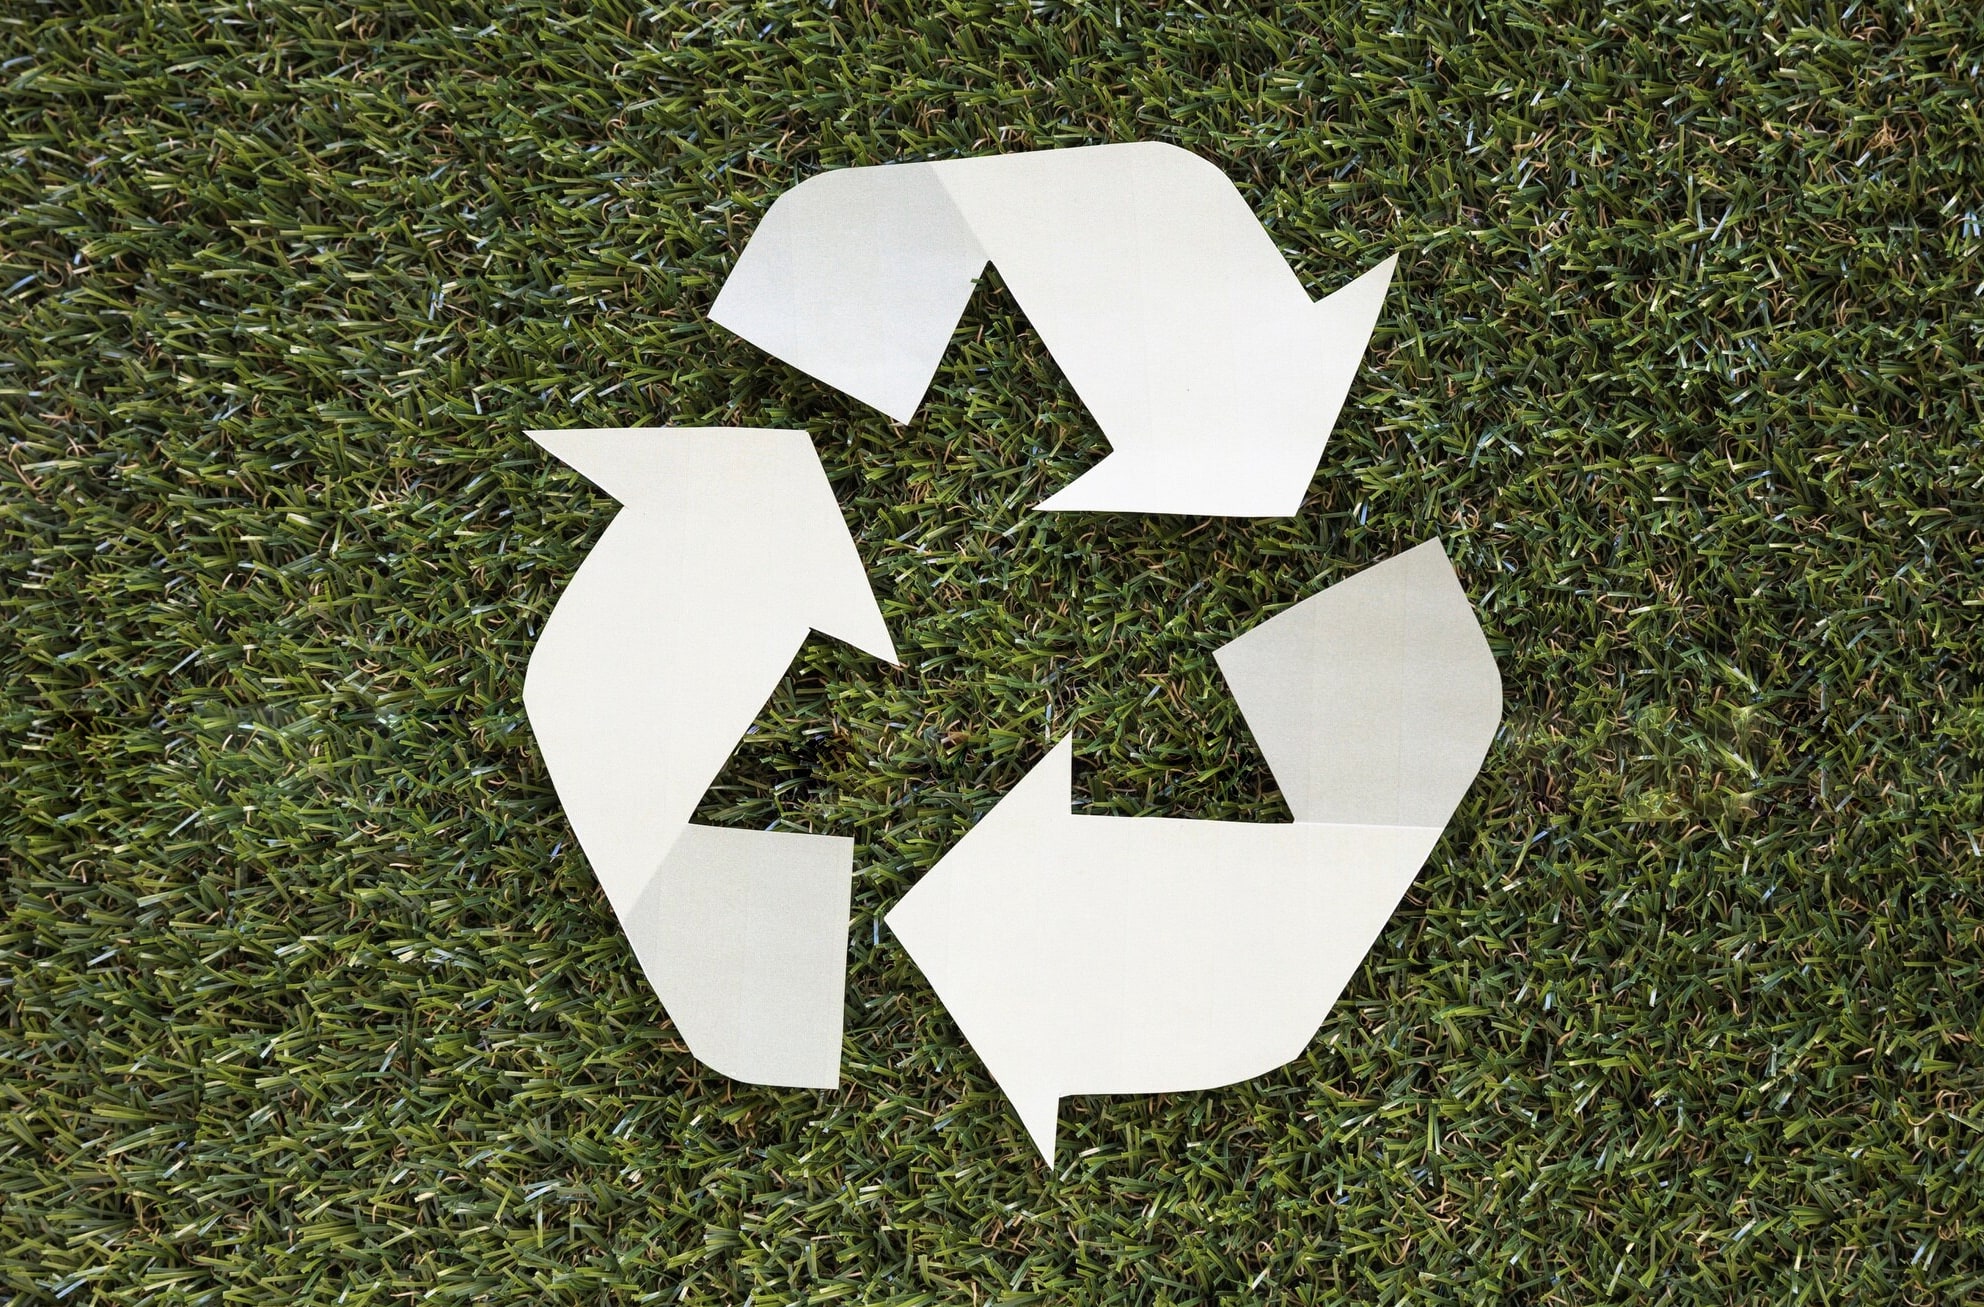 Symbole recyclage papier sur herbe.